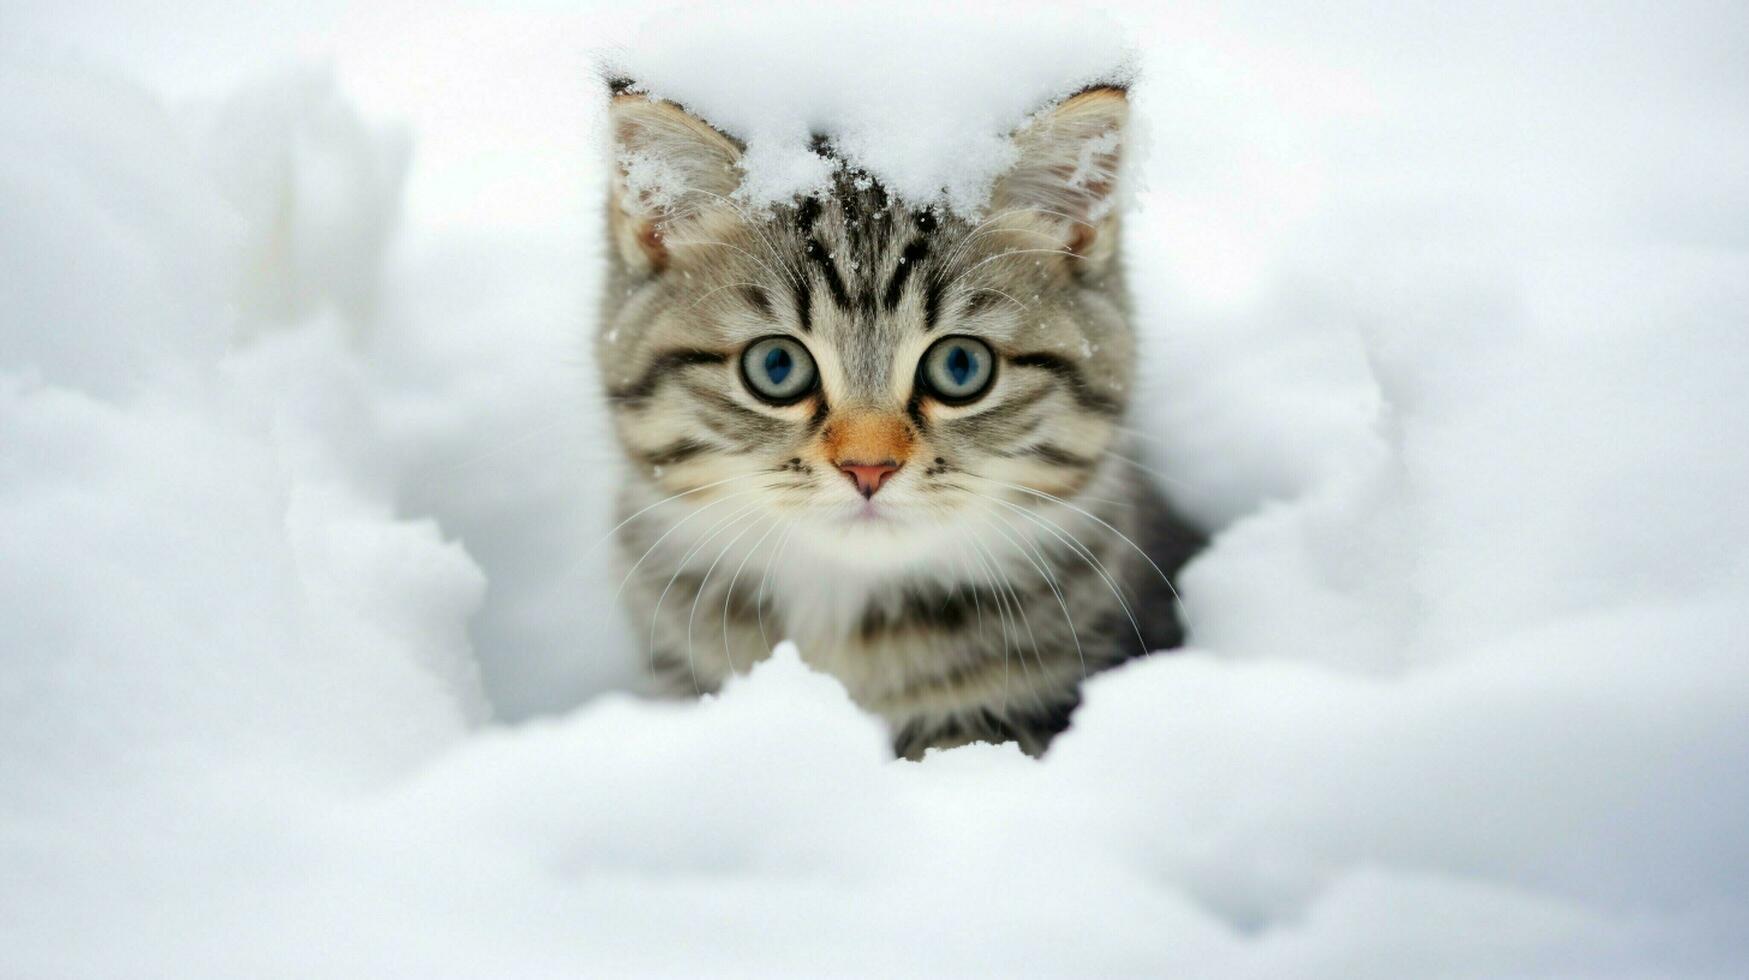 linda gatito sentado en nieve curioso a cámara con curiosidades foto